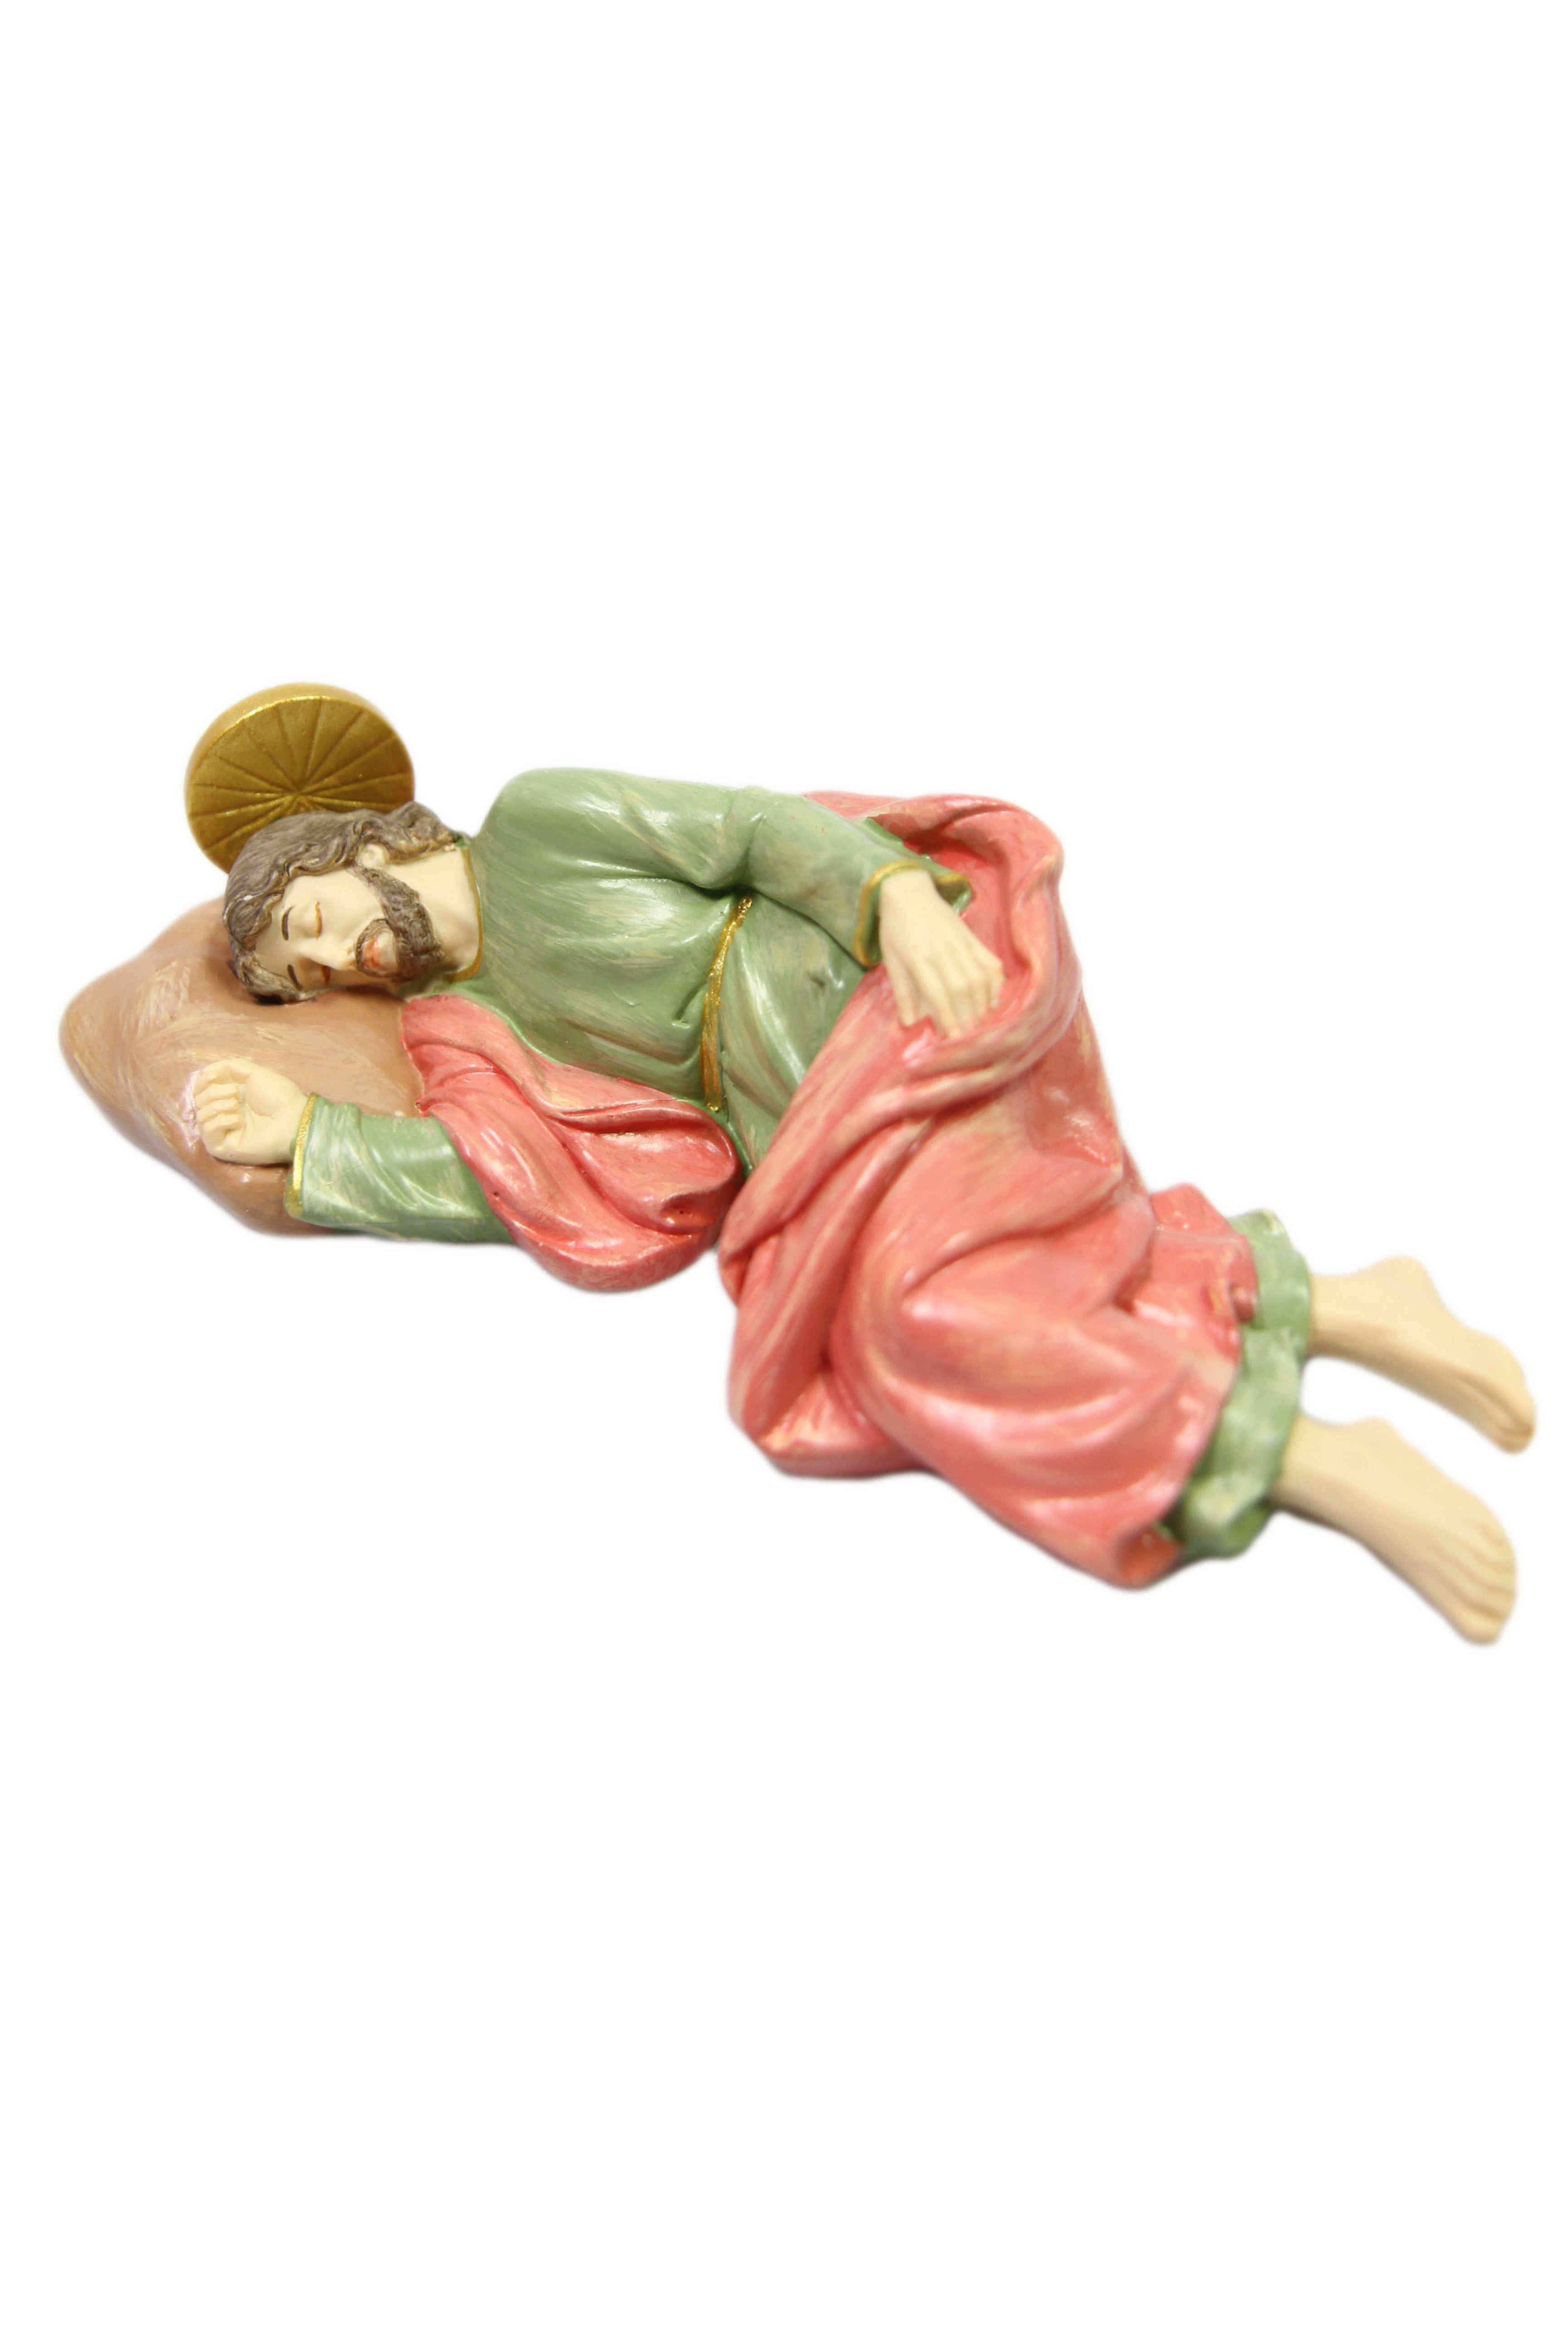 8" Sleeping Saint St Joseph Catholic Statue Sculpture Figurine Vittoria Collection Made in Italy Religious